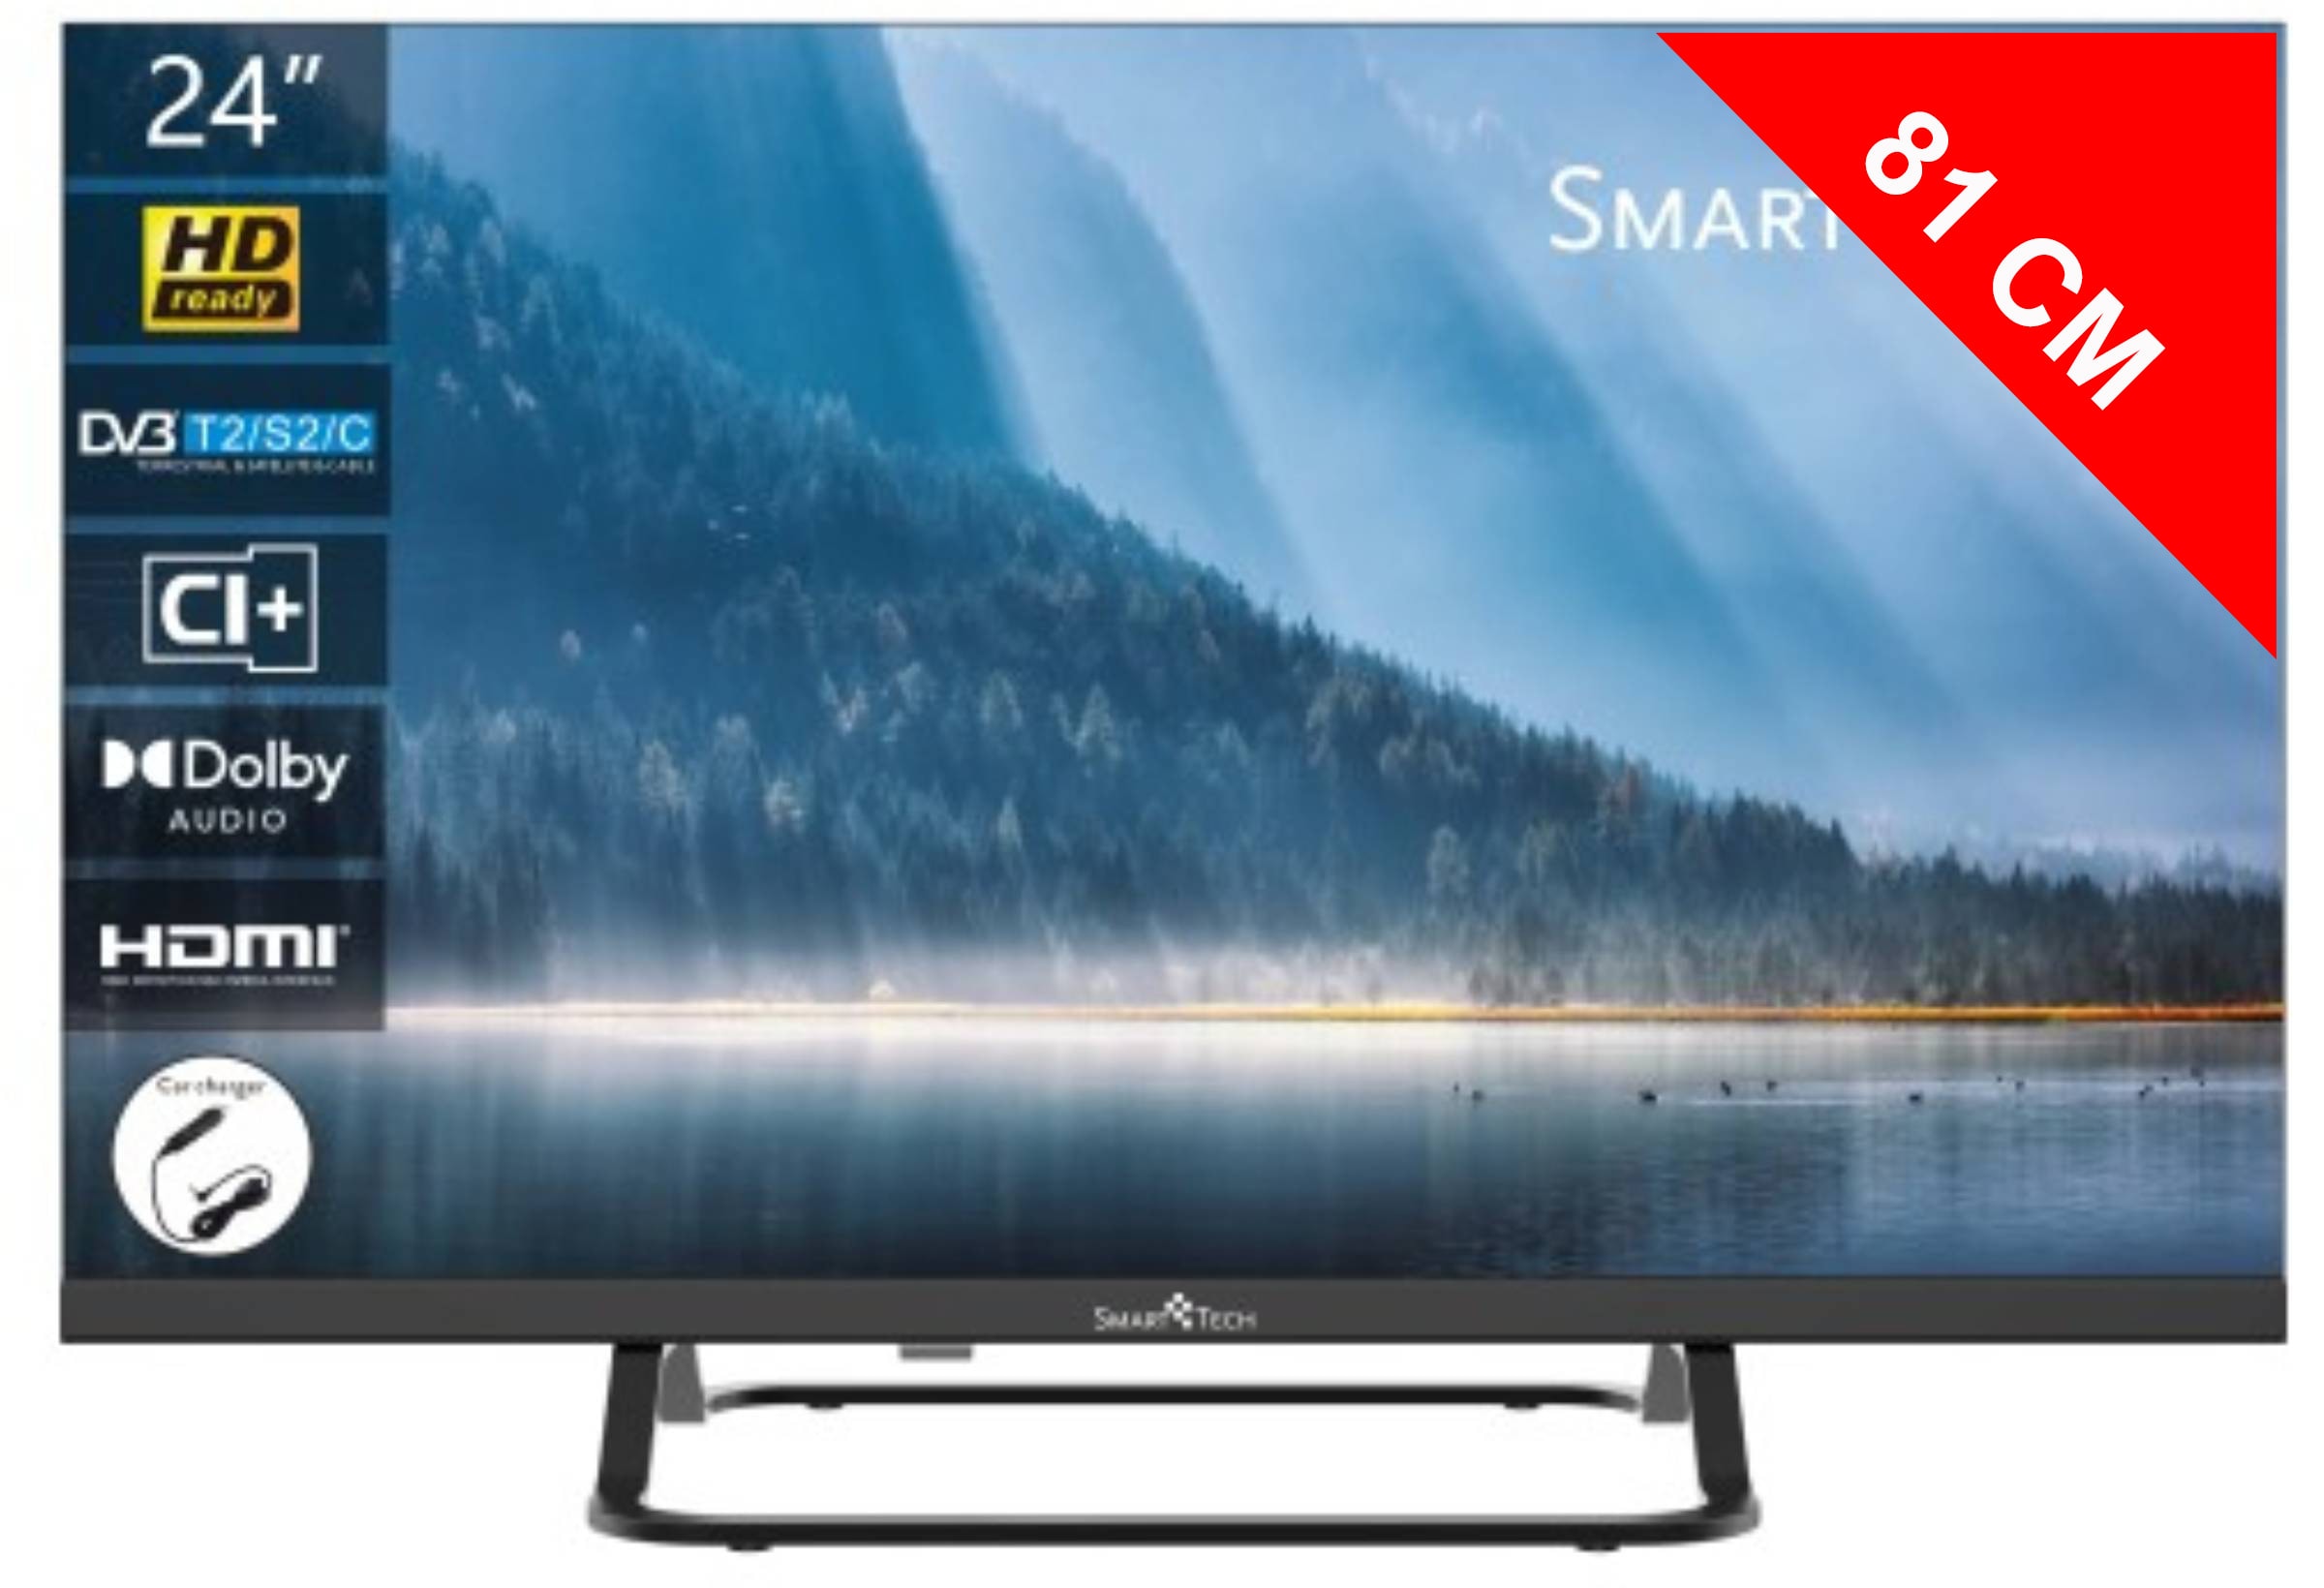 SMART TECH TV LED 81 cm HD Ready 32" - 32HN01V